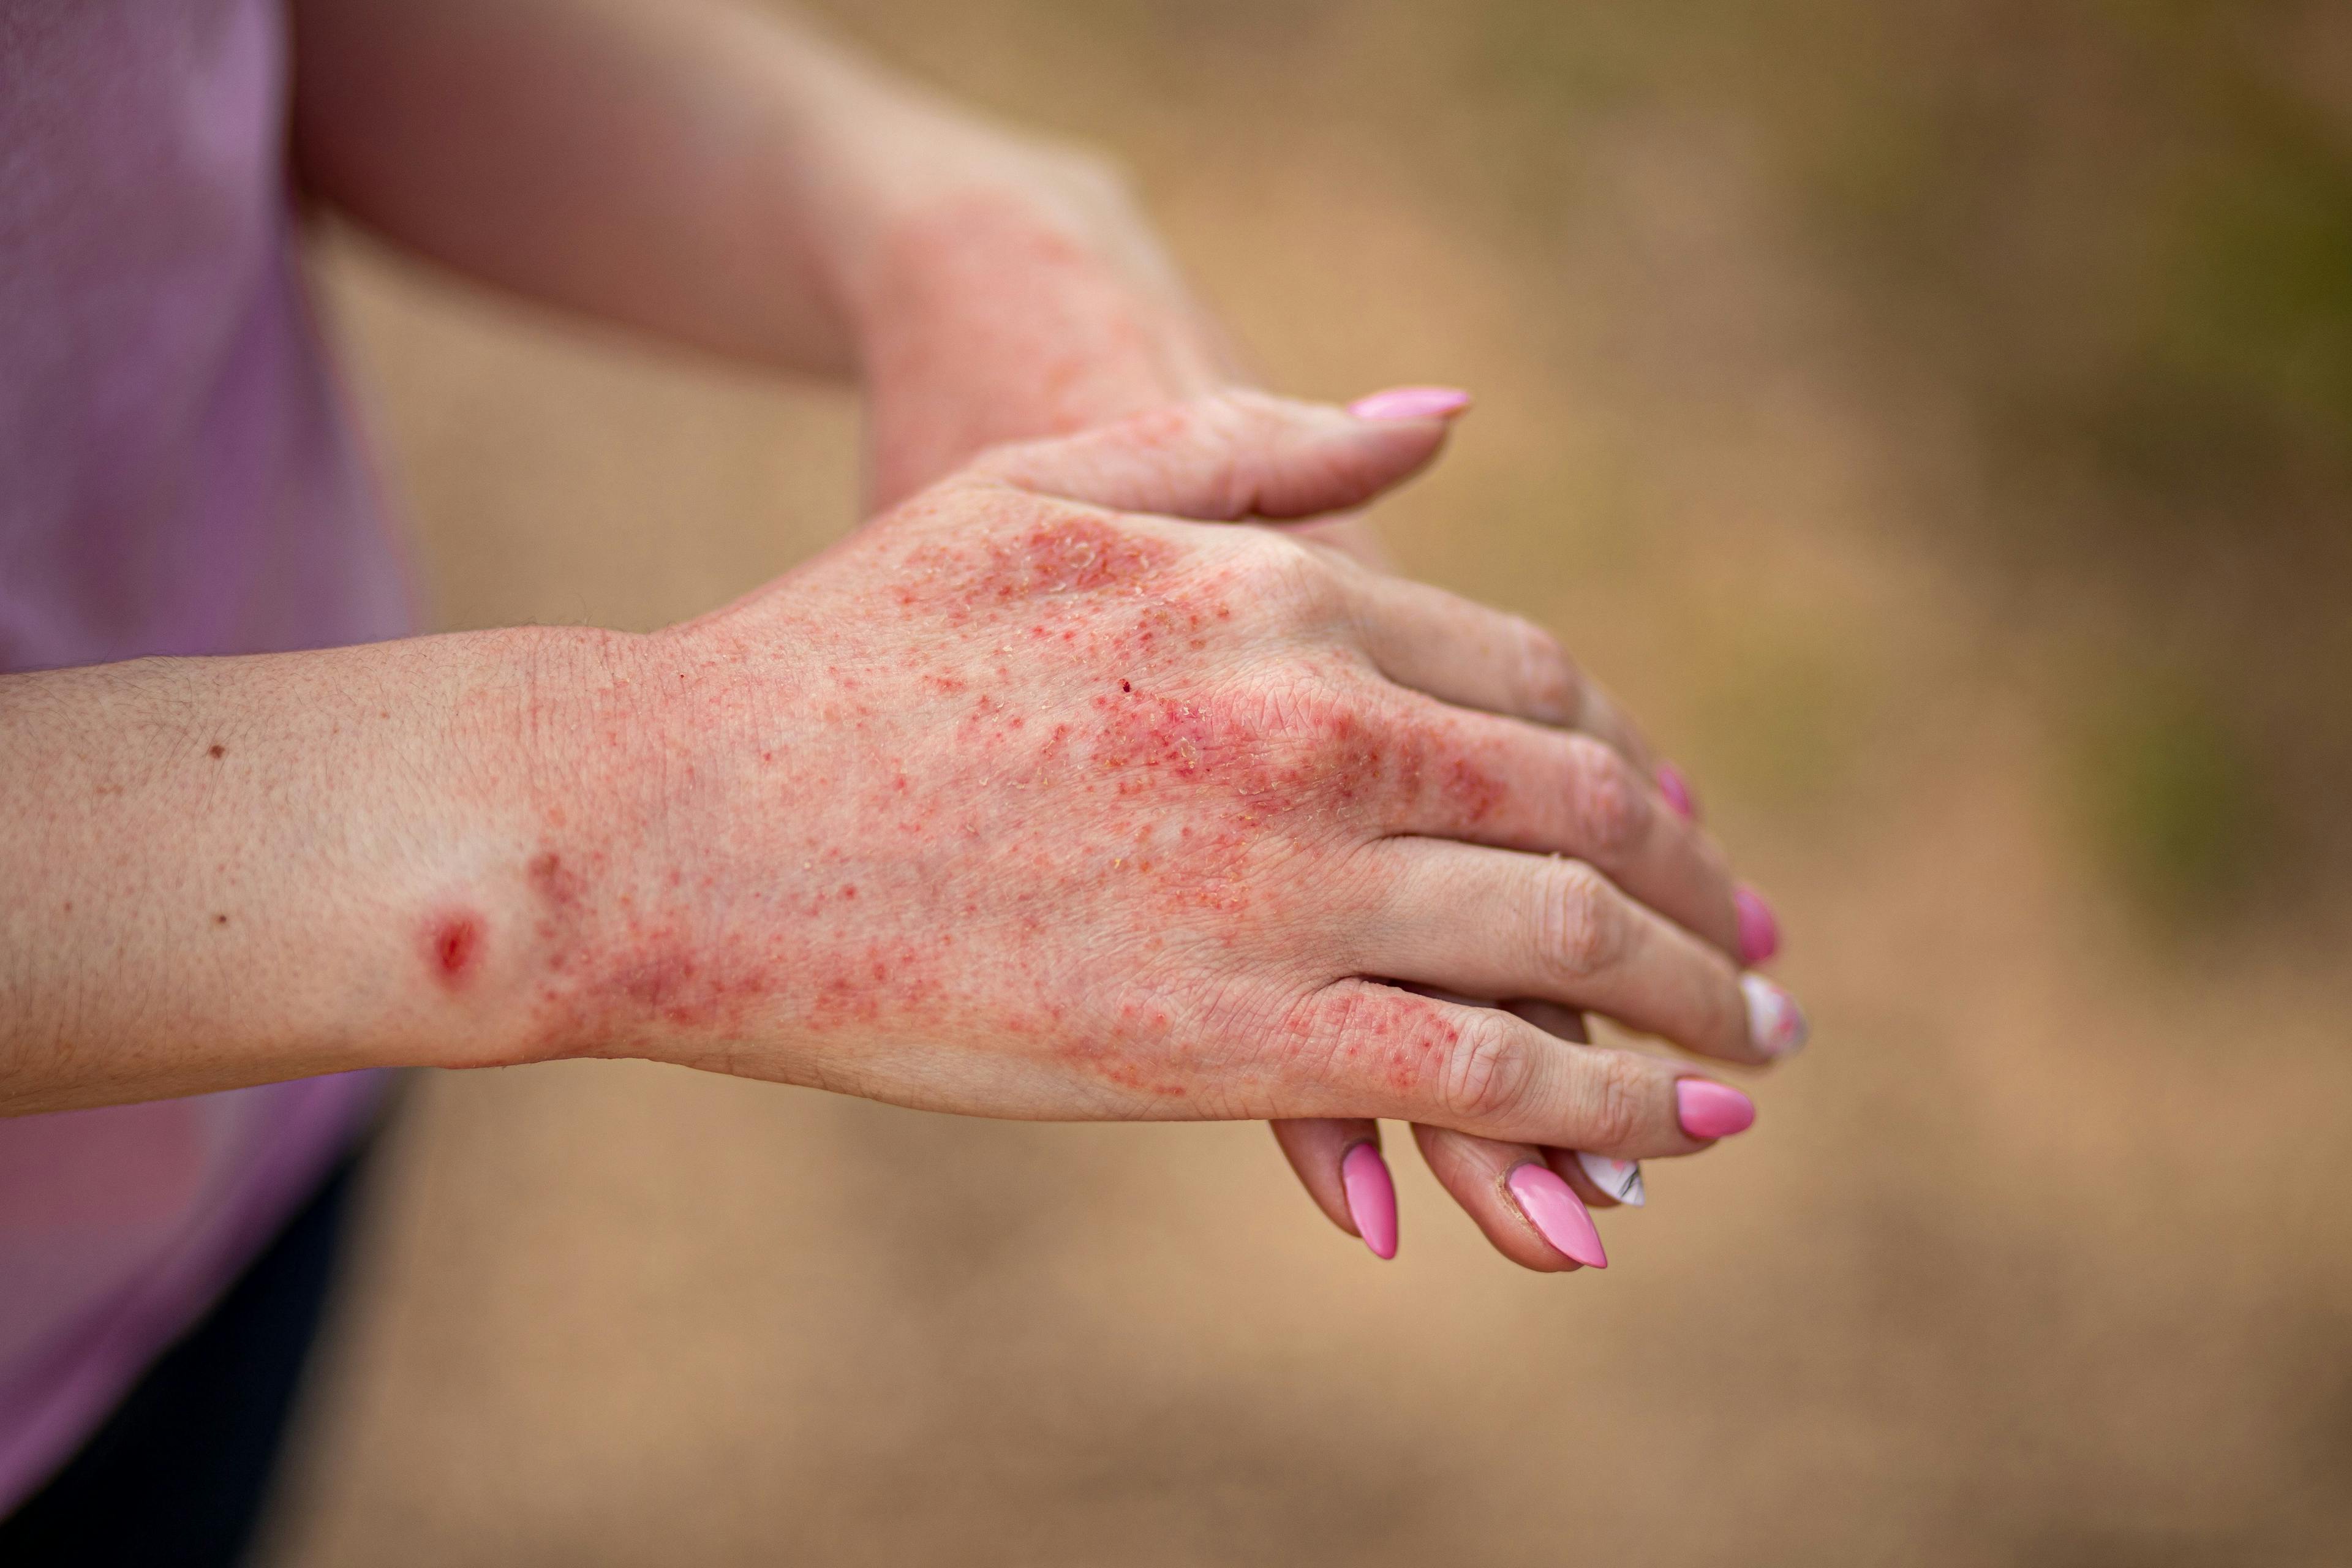 Hands with atopic dermatitis | Image credit: InfiniteStudio - stock.adobe.com